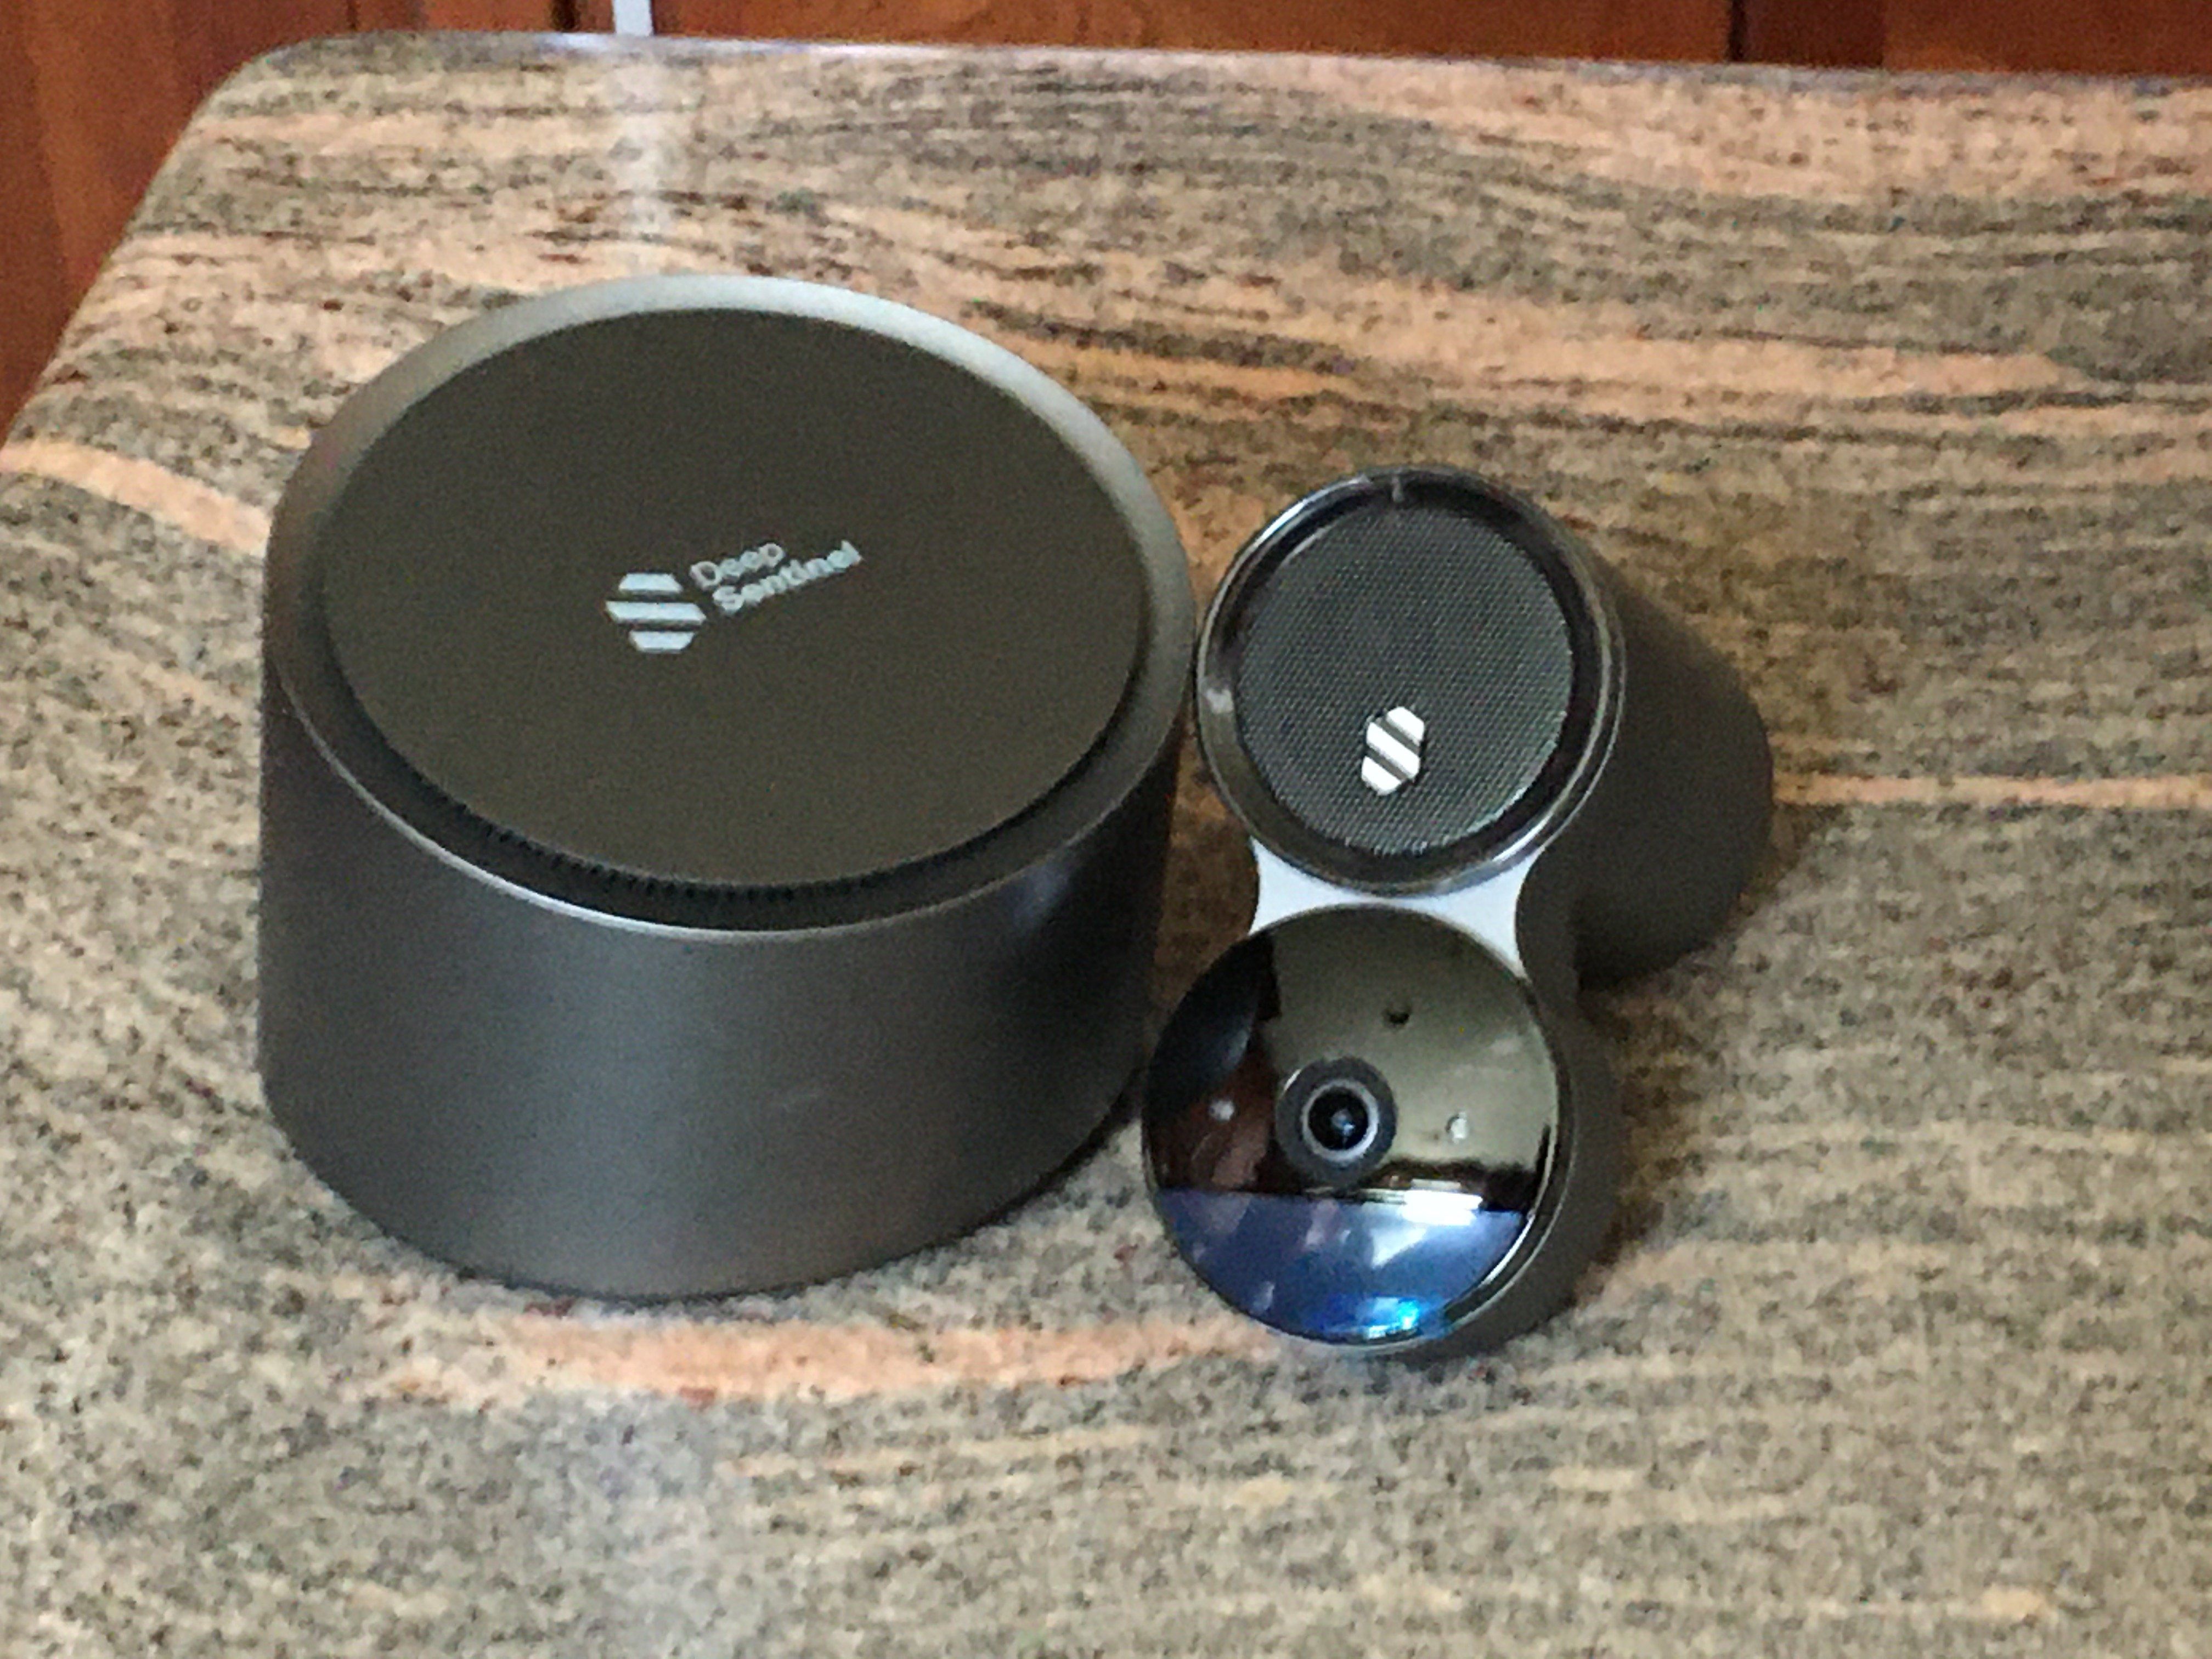 Deep Sentinel AI hub and Camera on a countertop